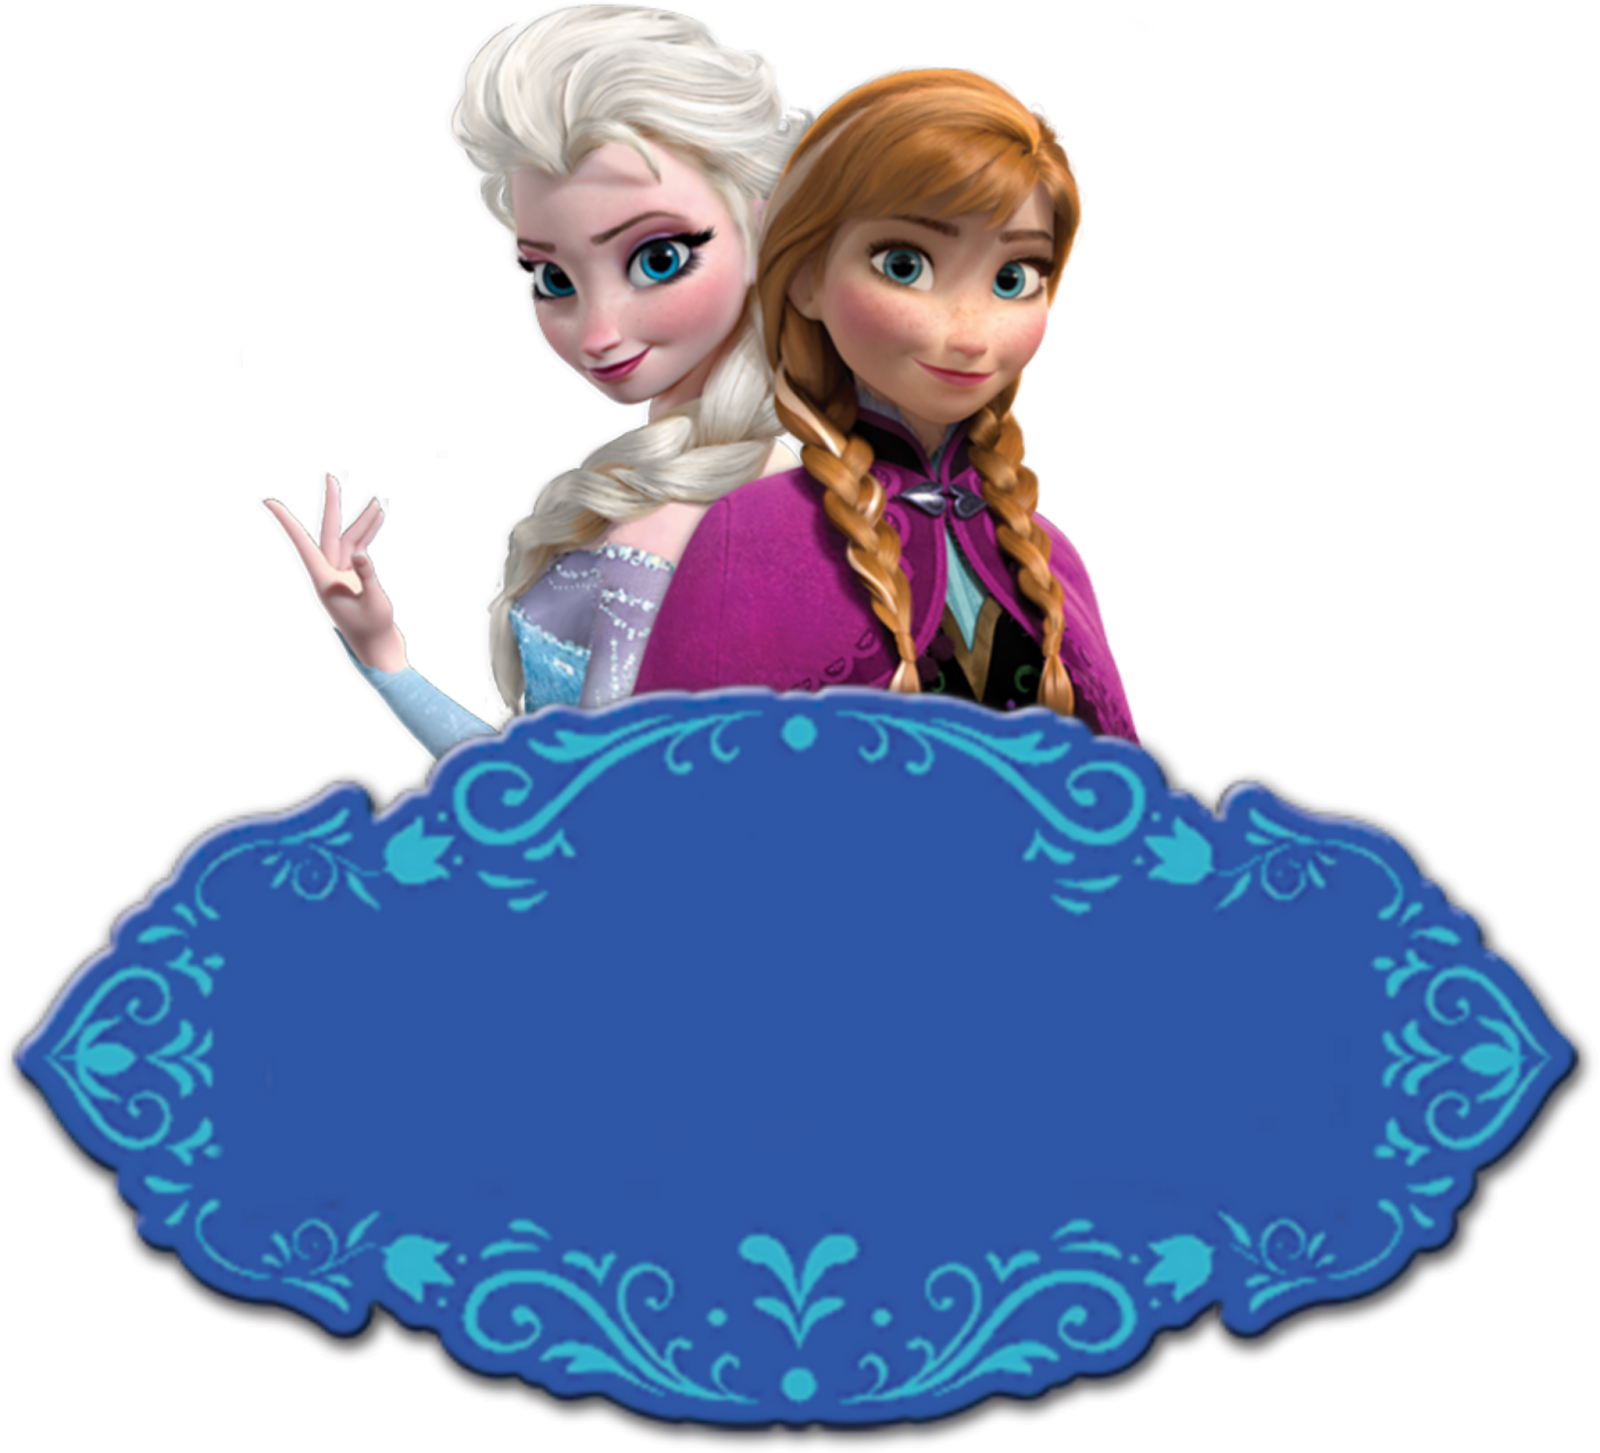 Fazendo A Propria Festa: Kit De Personalizados Tema Frozen   Frozen Png - Frozen, Transparent background PNG HD thumbnail